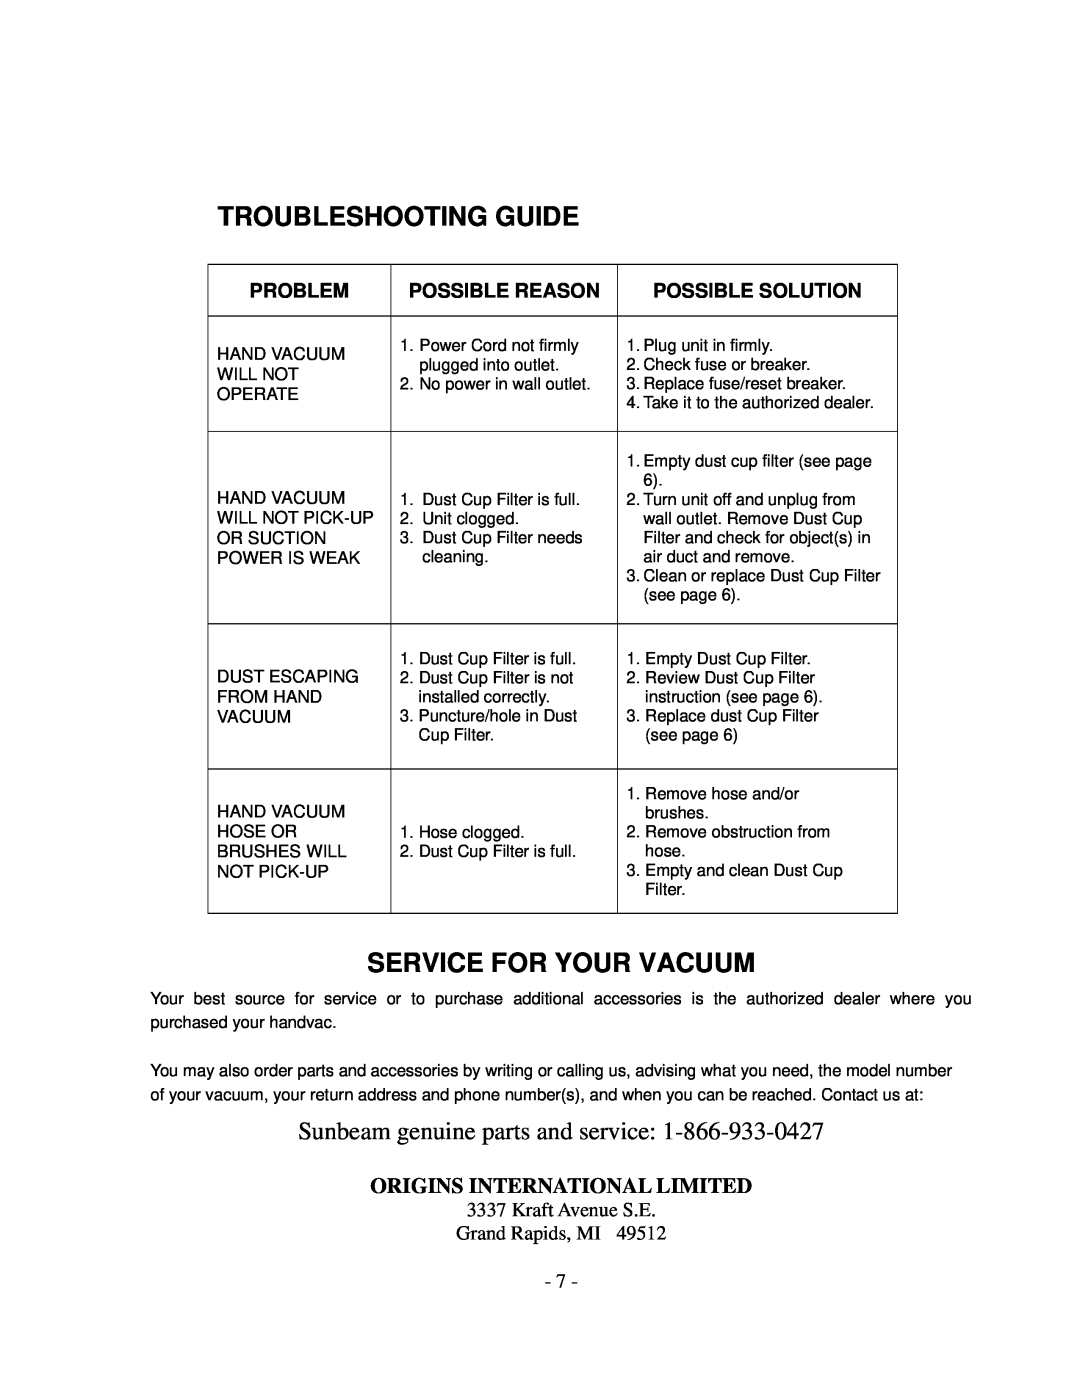 Sunbeam SBH-200 manual Troubleshooting Guide, Service For Your Vacuum, Kraft Avenue S.E Grand Rapids, MI 